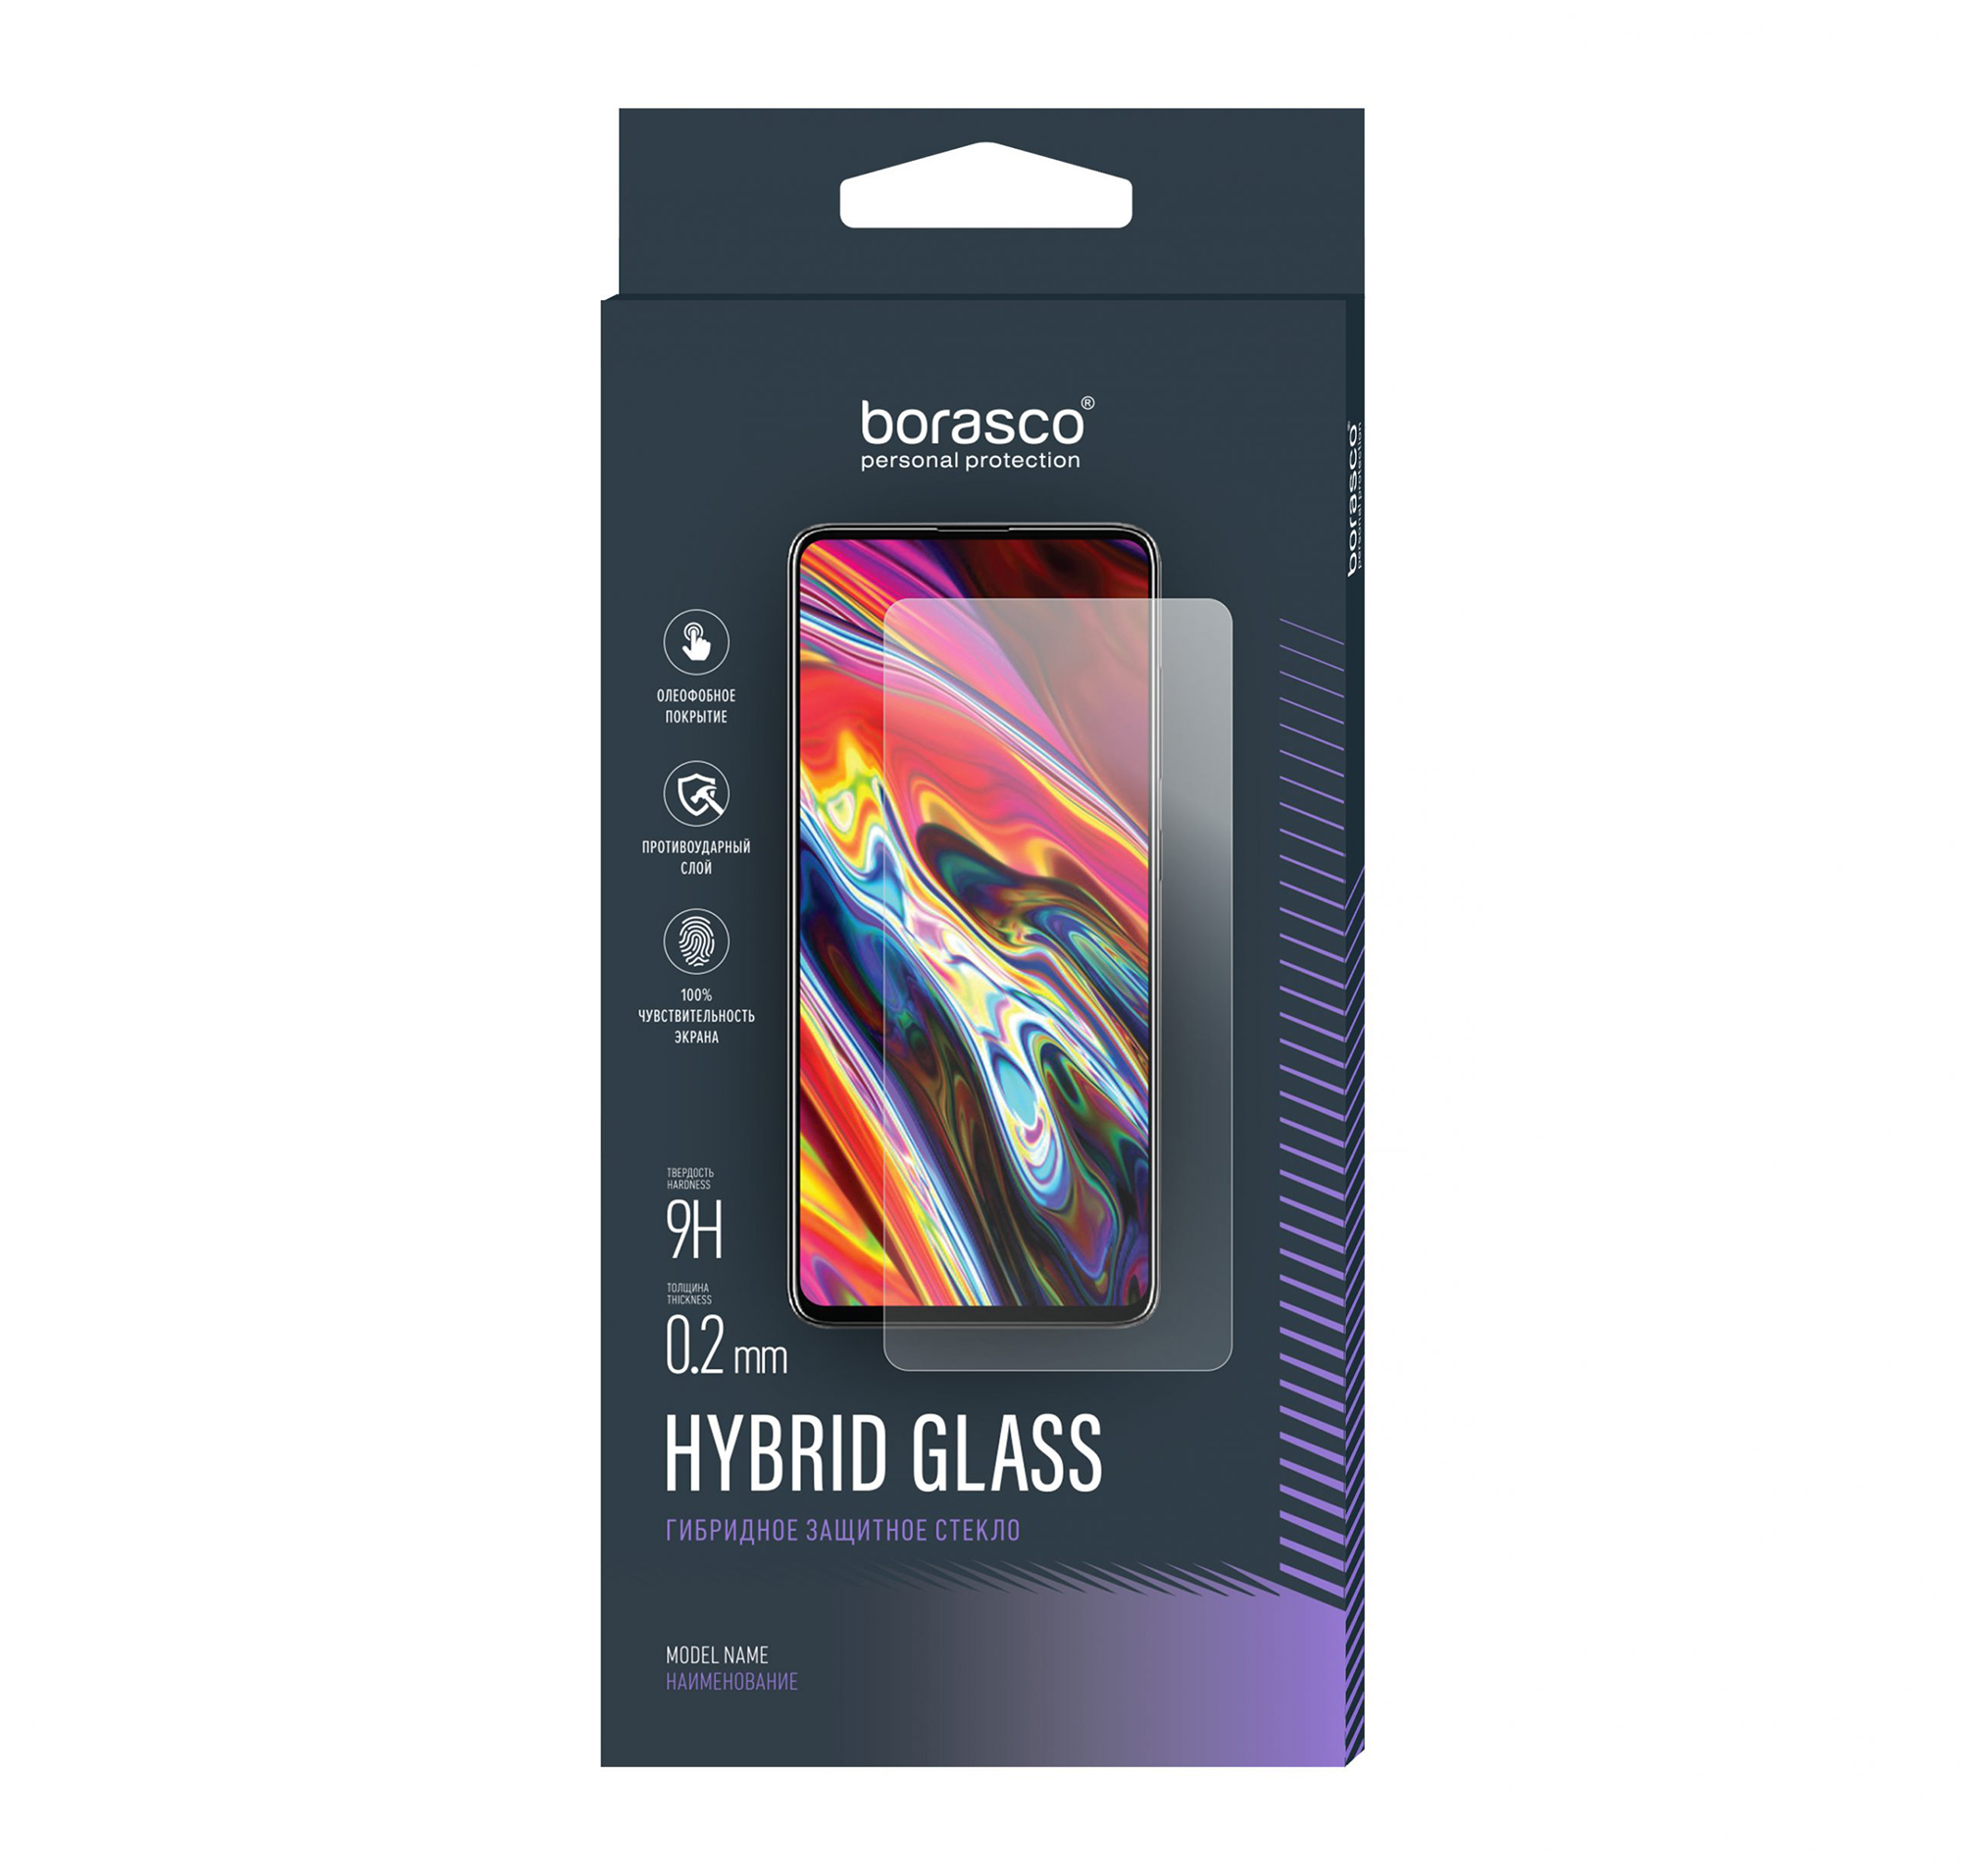 Защитное стекло Hybrid Glass для Samsung Galaxy Tab S6 lite стекло защитное для samsung galaxy tab a7 lite